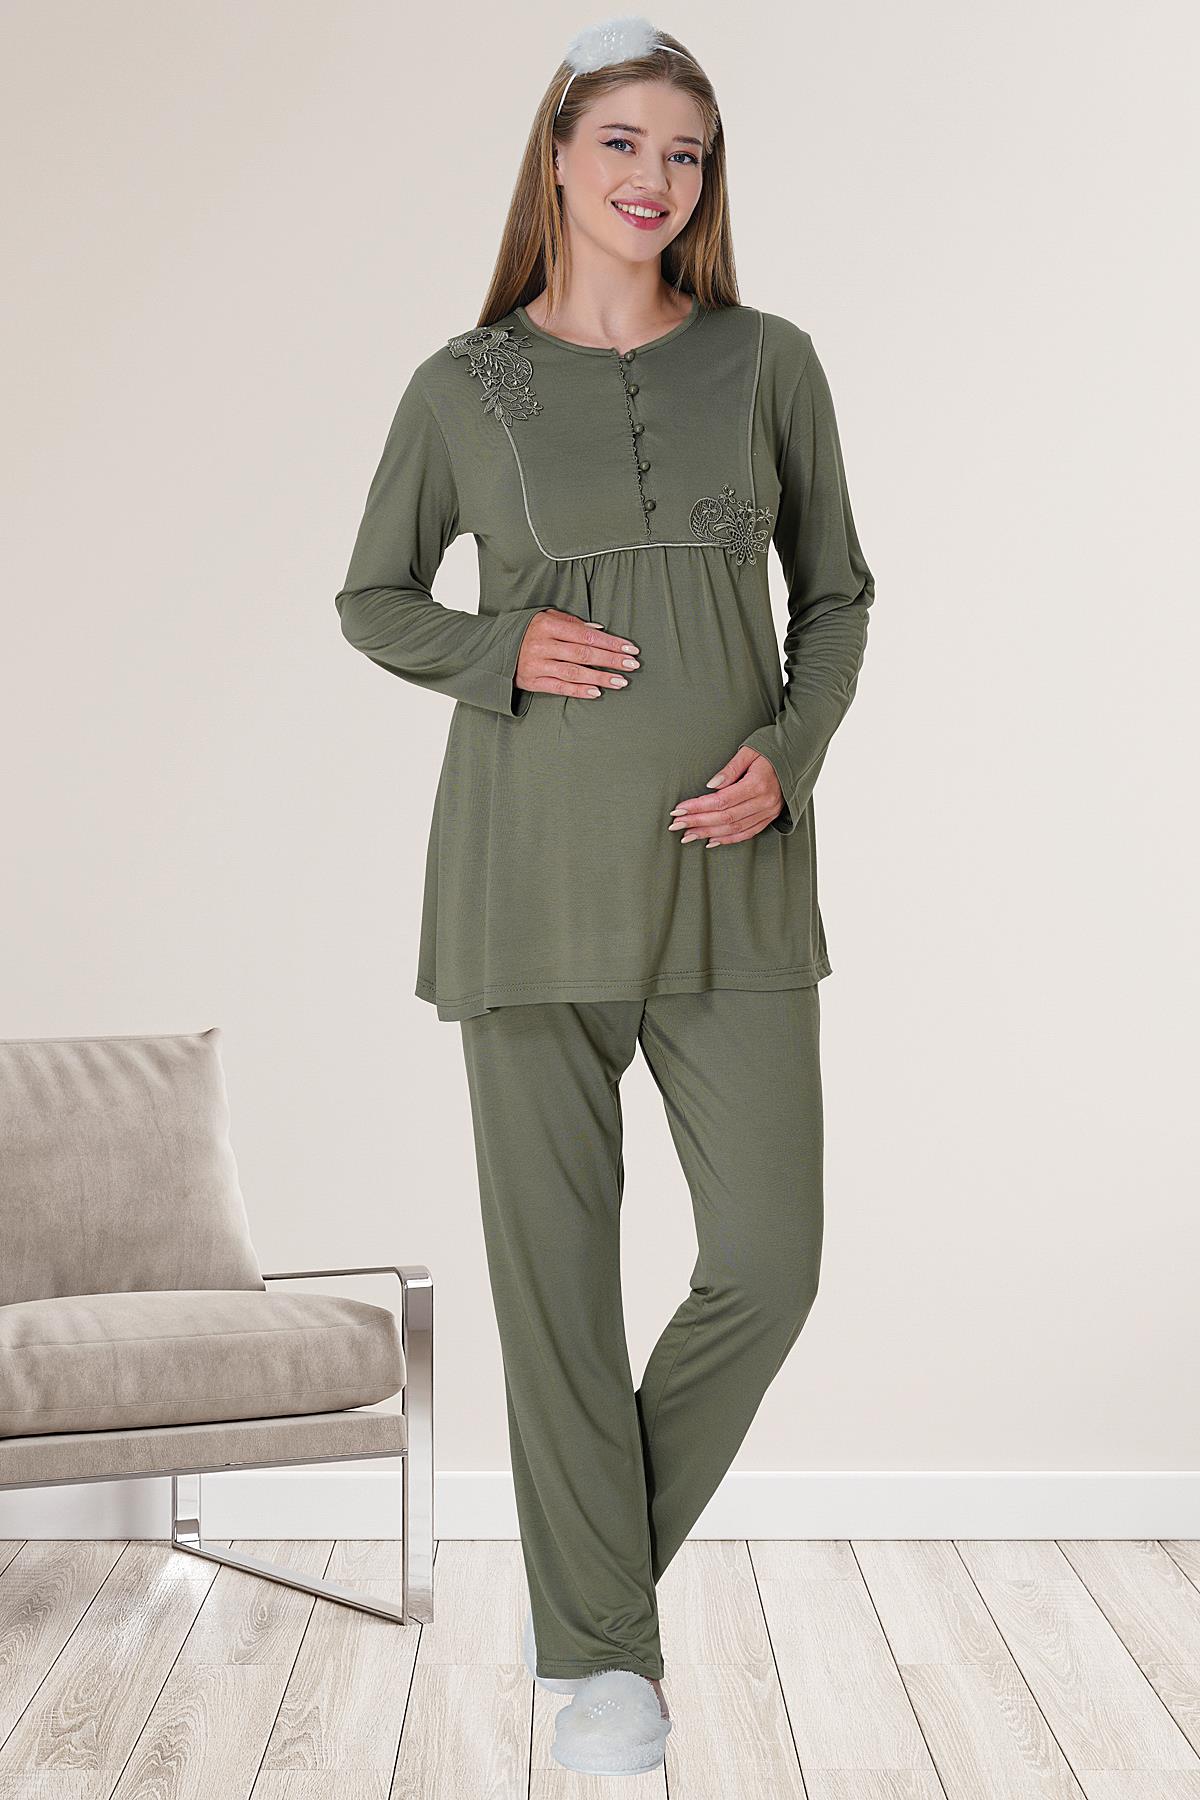 Shopymommy 5828 Embossed Lace Maternity & Nursing Pajamas Green